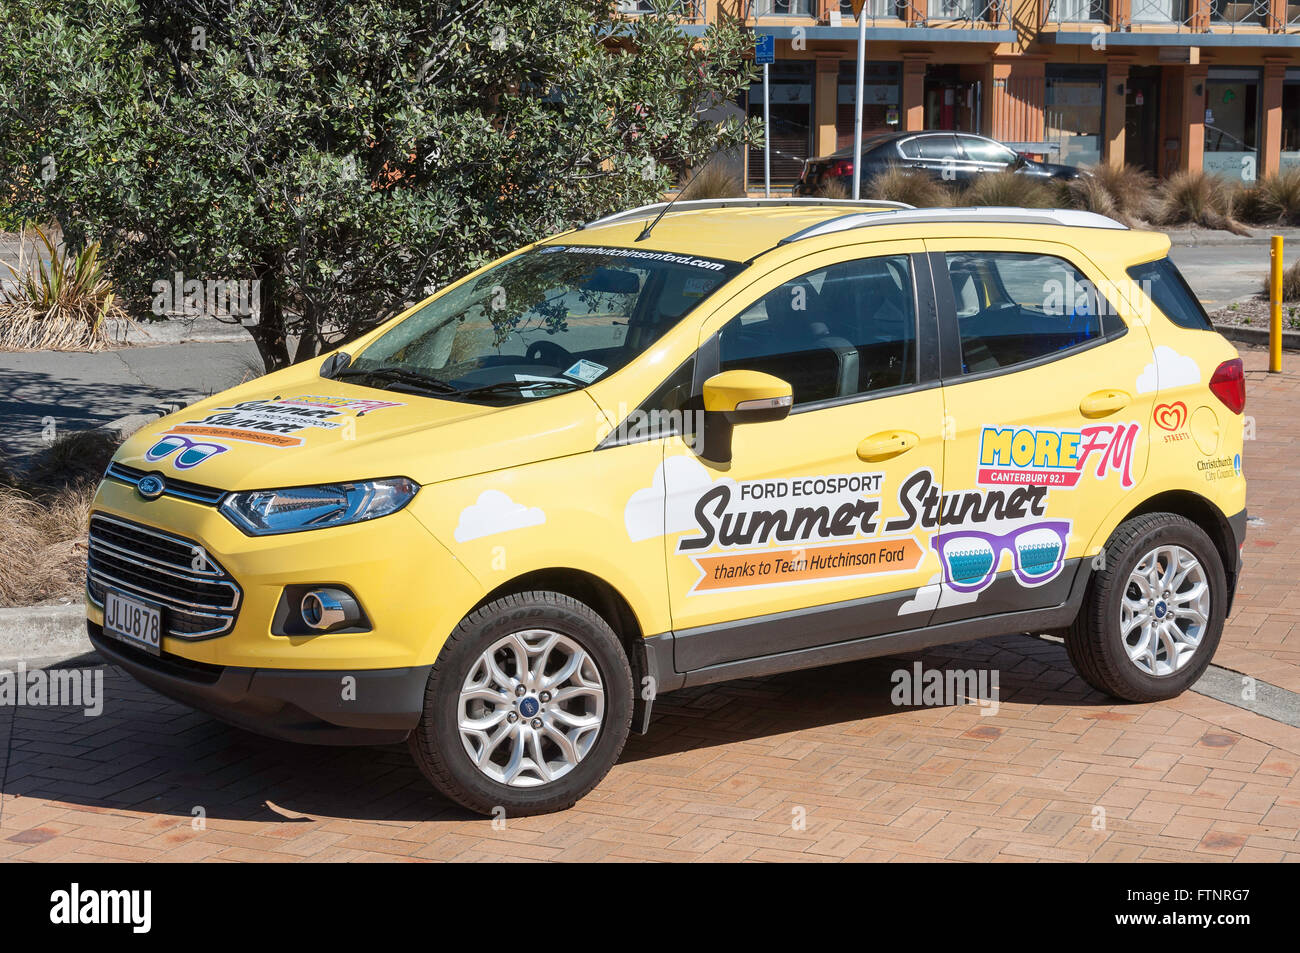 More FM Ford EcoSport Summer Stunner promotion car, New Brighton, Christchurch, Canterbury Region, New Zealand. Stock Photo